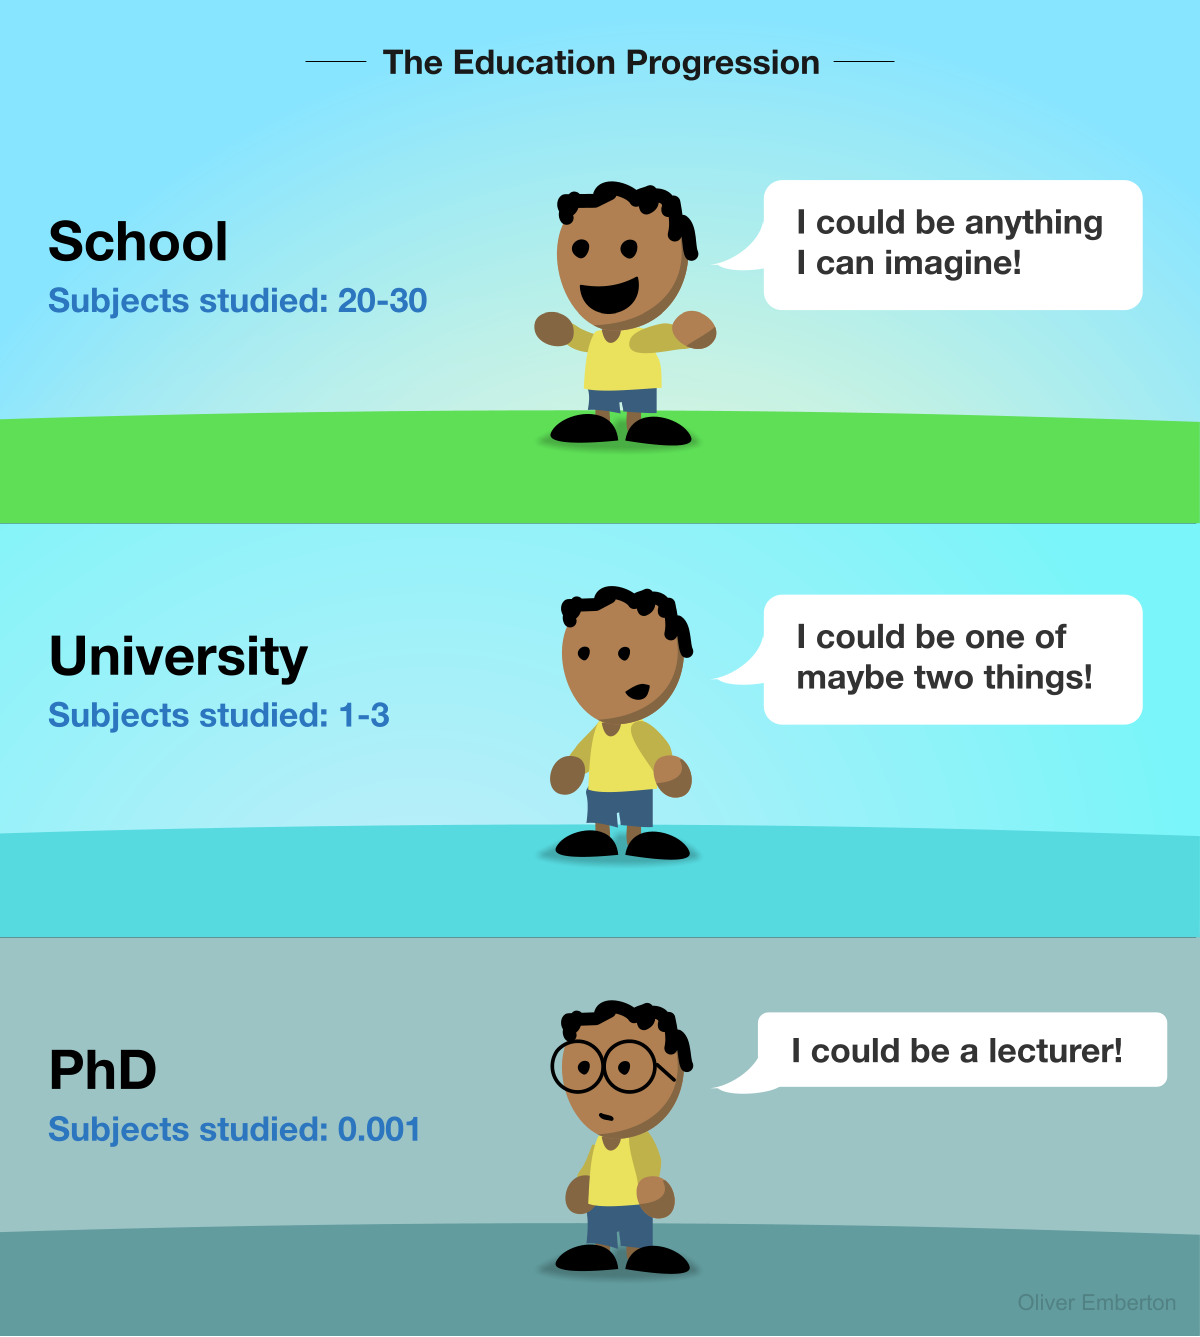 The education progression